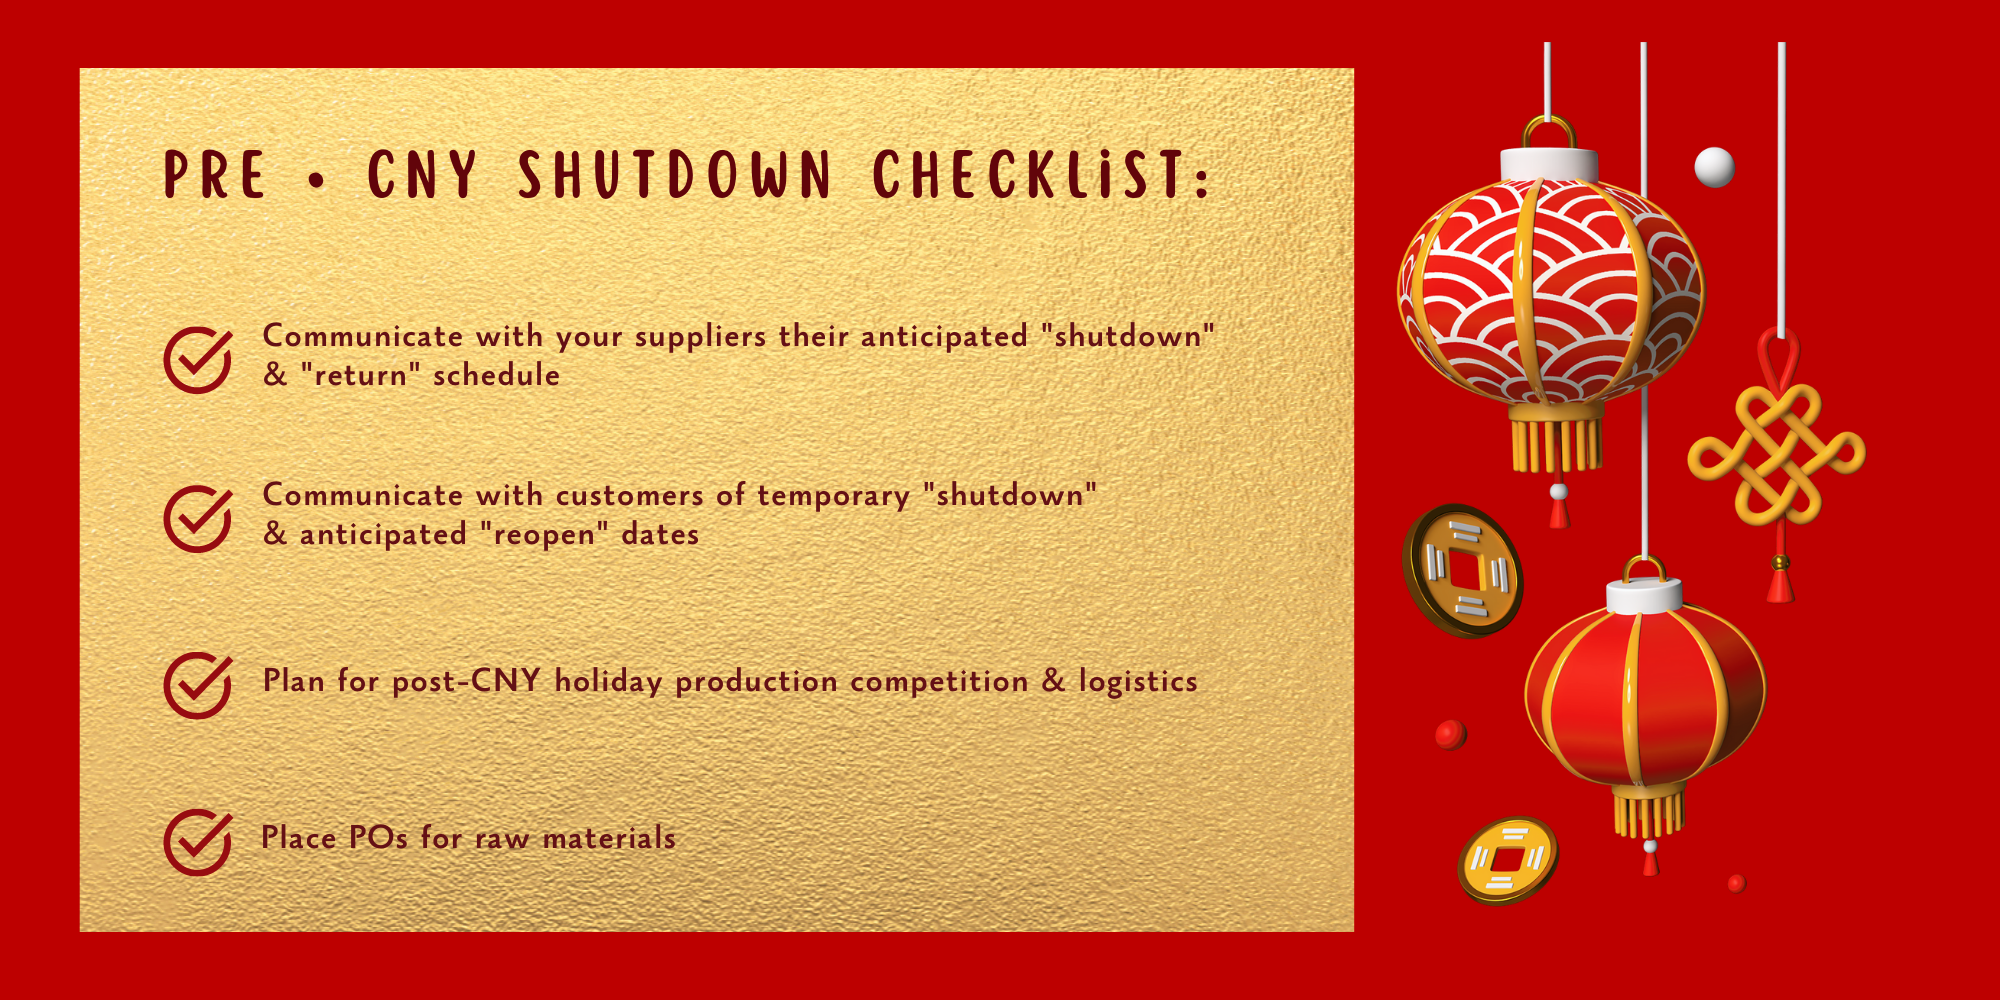 Pre-CNY Shutdown checklist